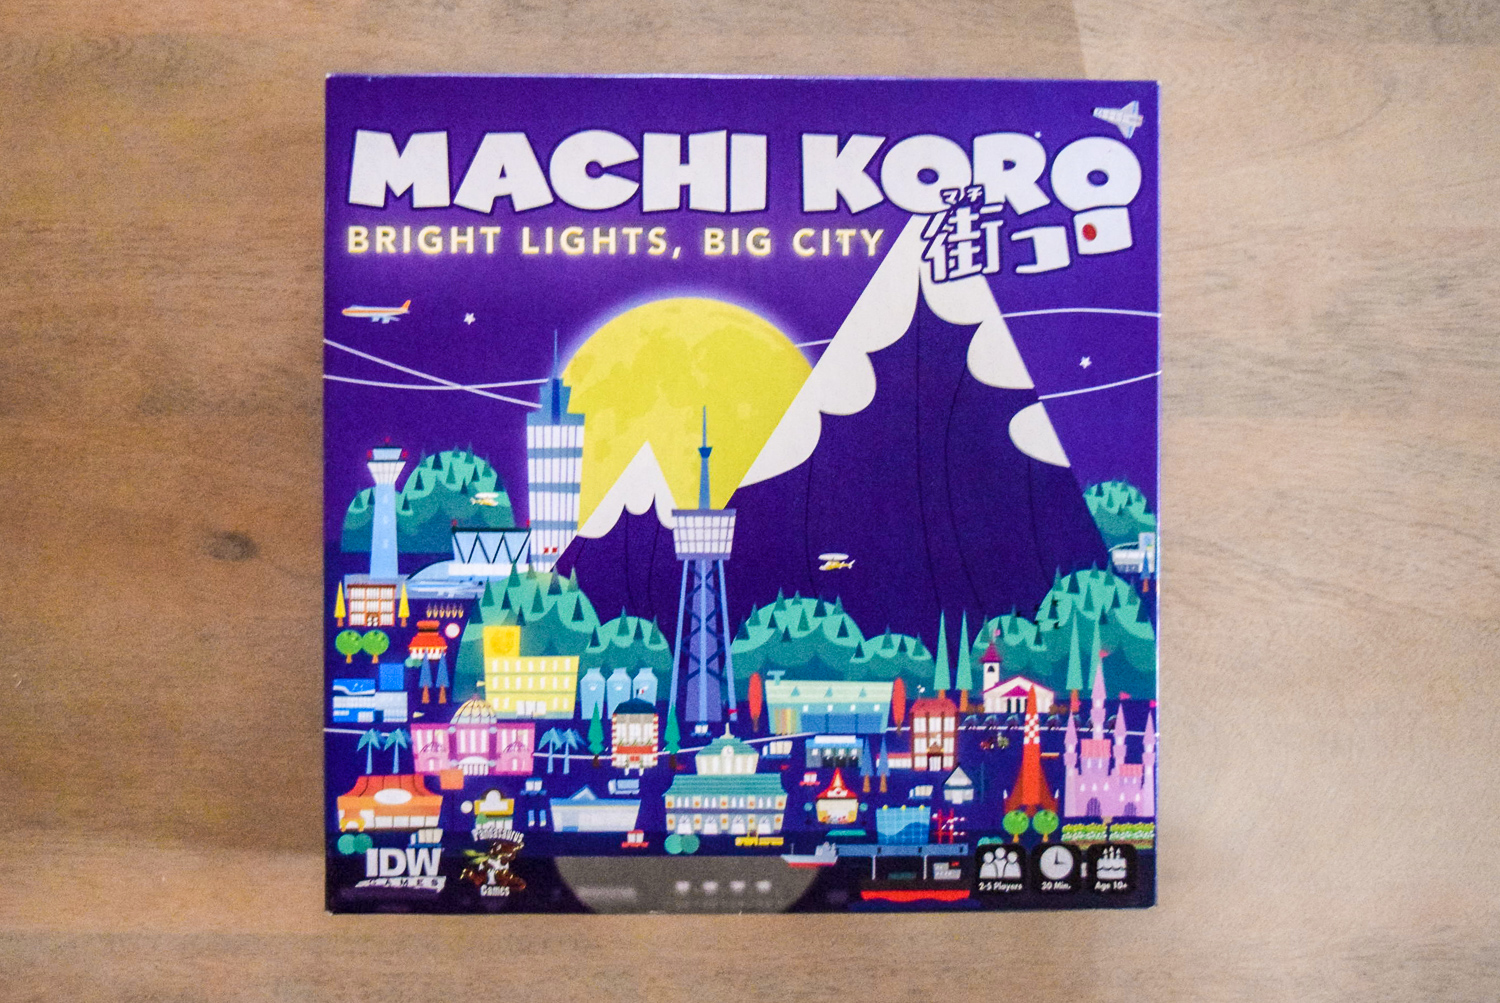 Machi Koro: Bright Lights, Big City box from the top